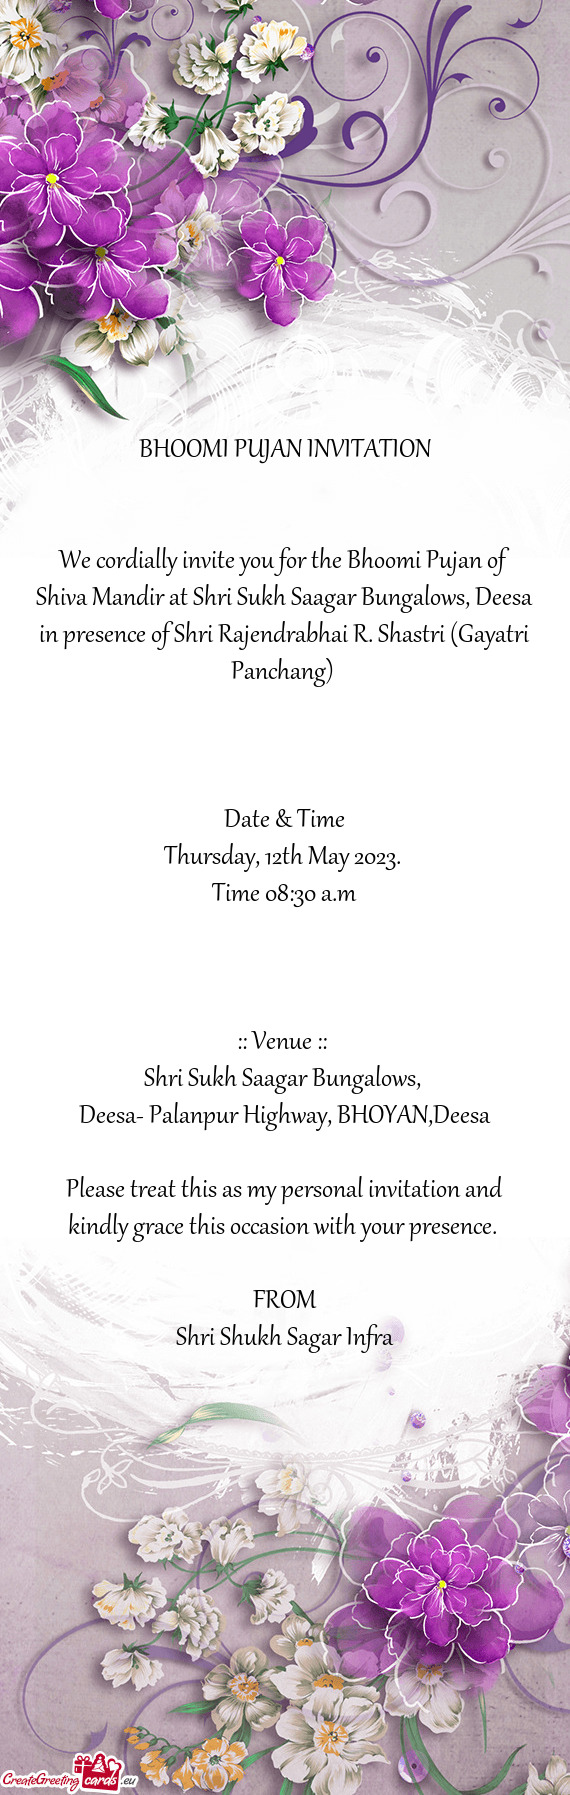 We cordially invite you for the Bhoomi Pujan of Shiva Mandir at Shri Sukh Saagar Bungalows, Deesa in